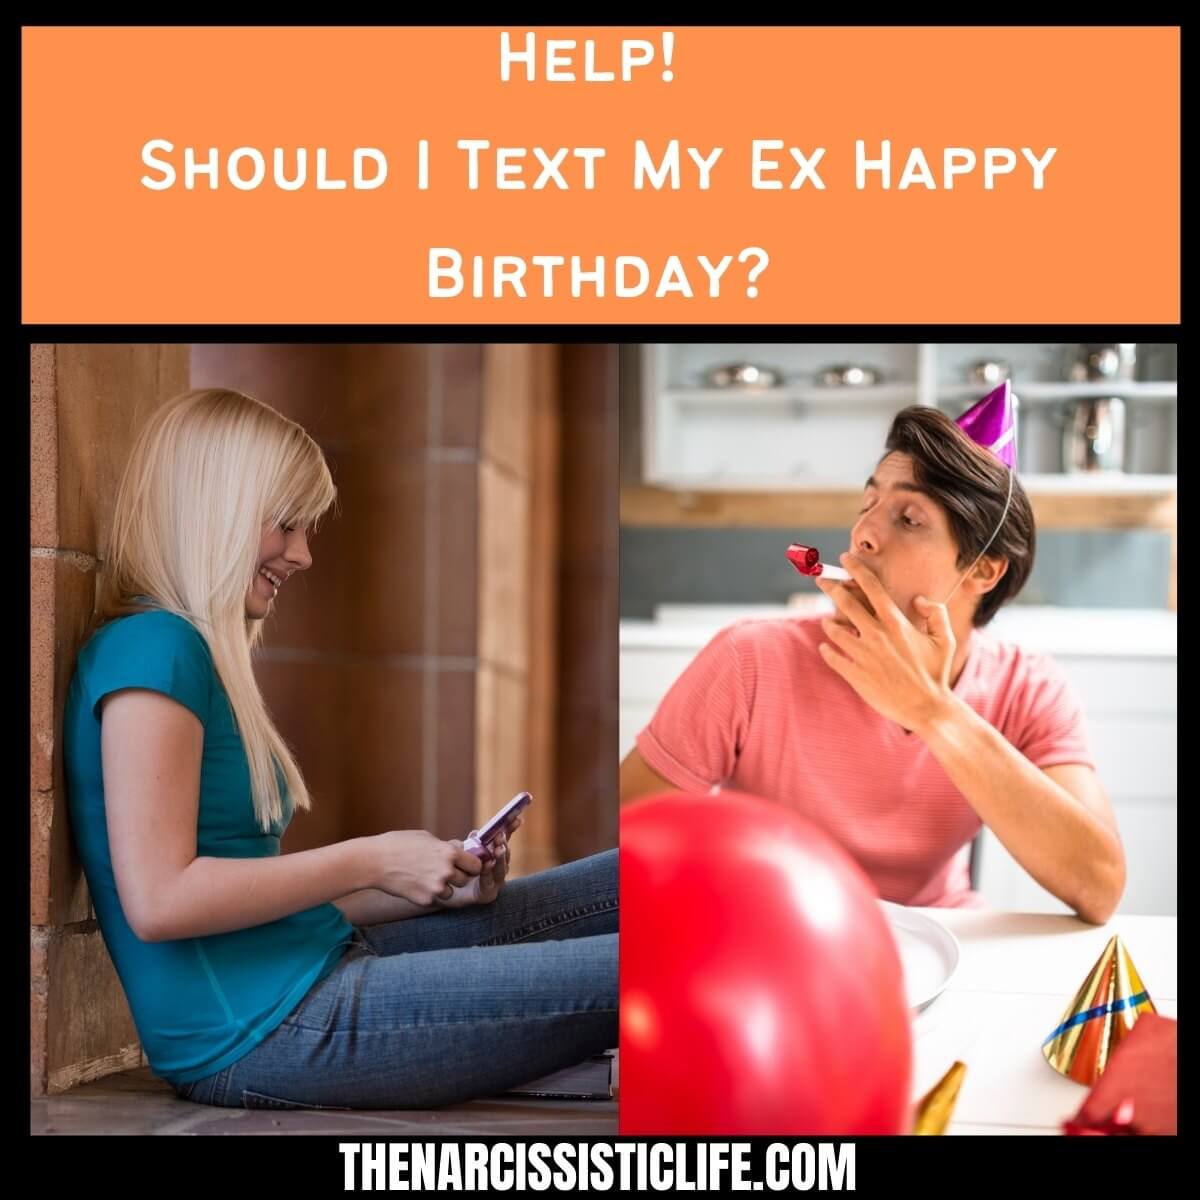 Should I Text My Ex Happy Birthday?